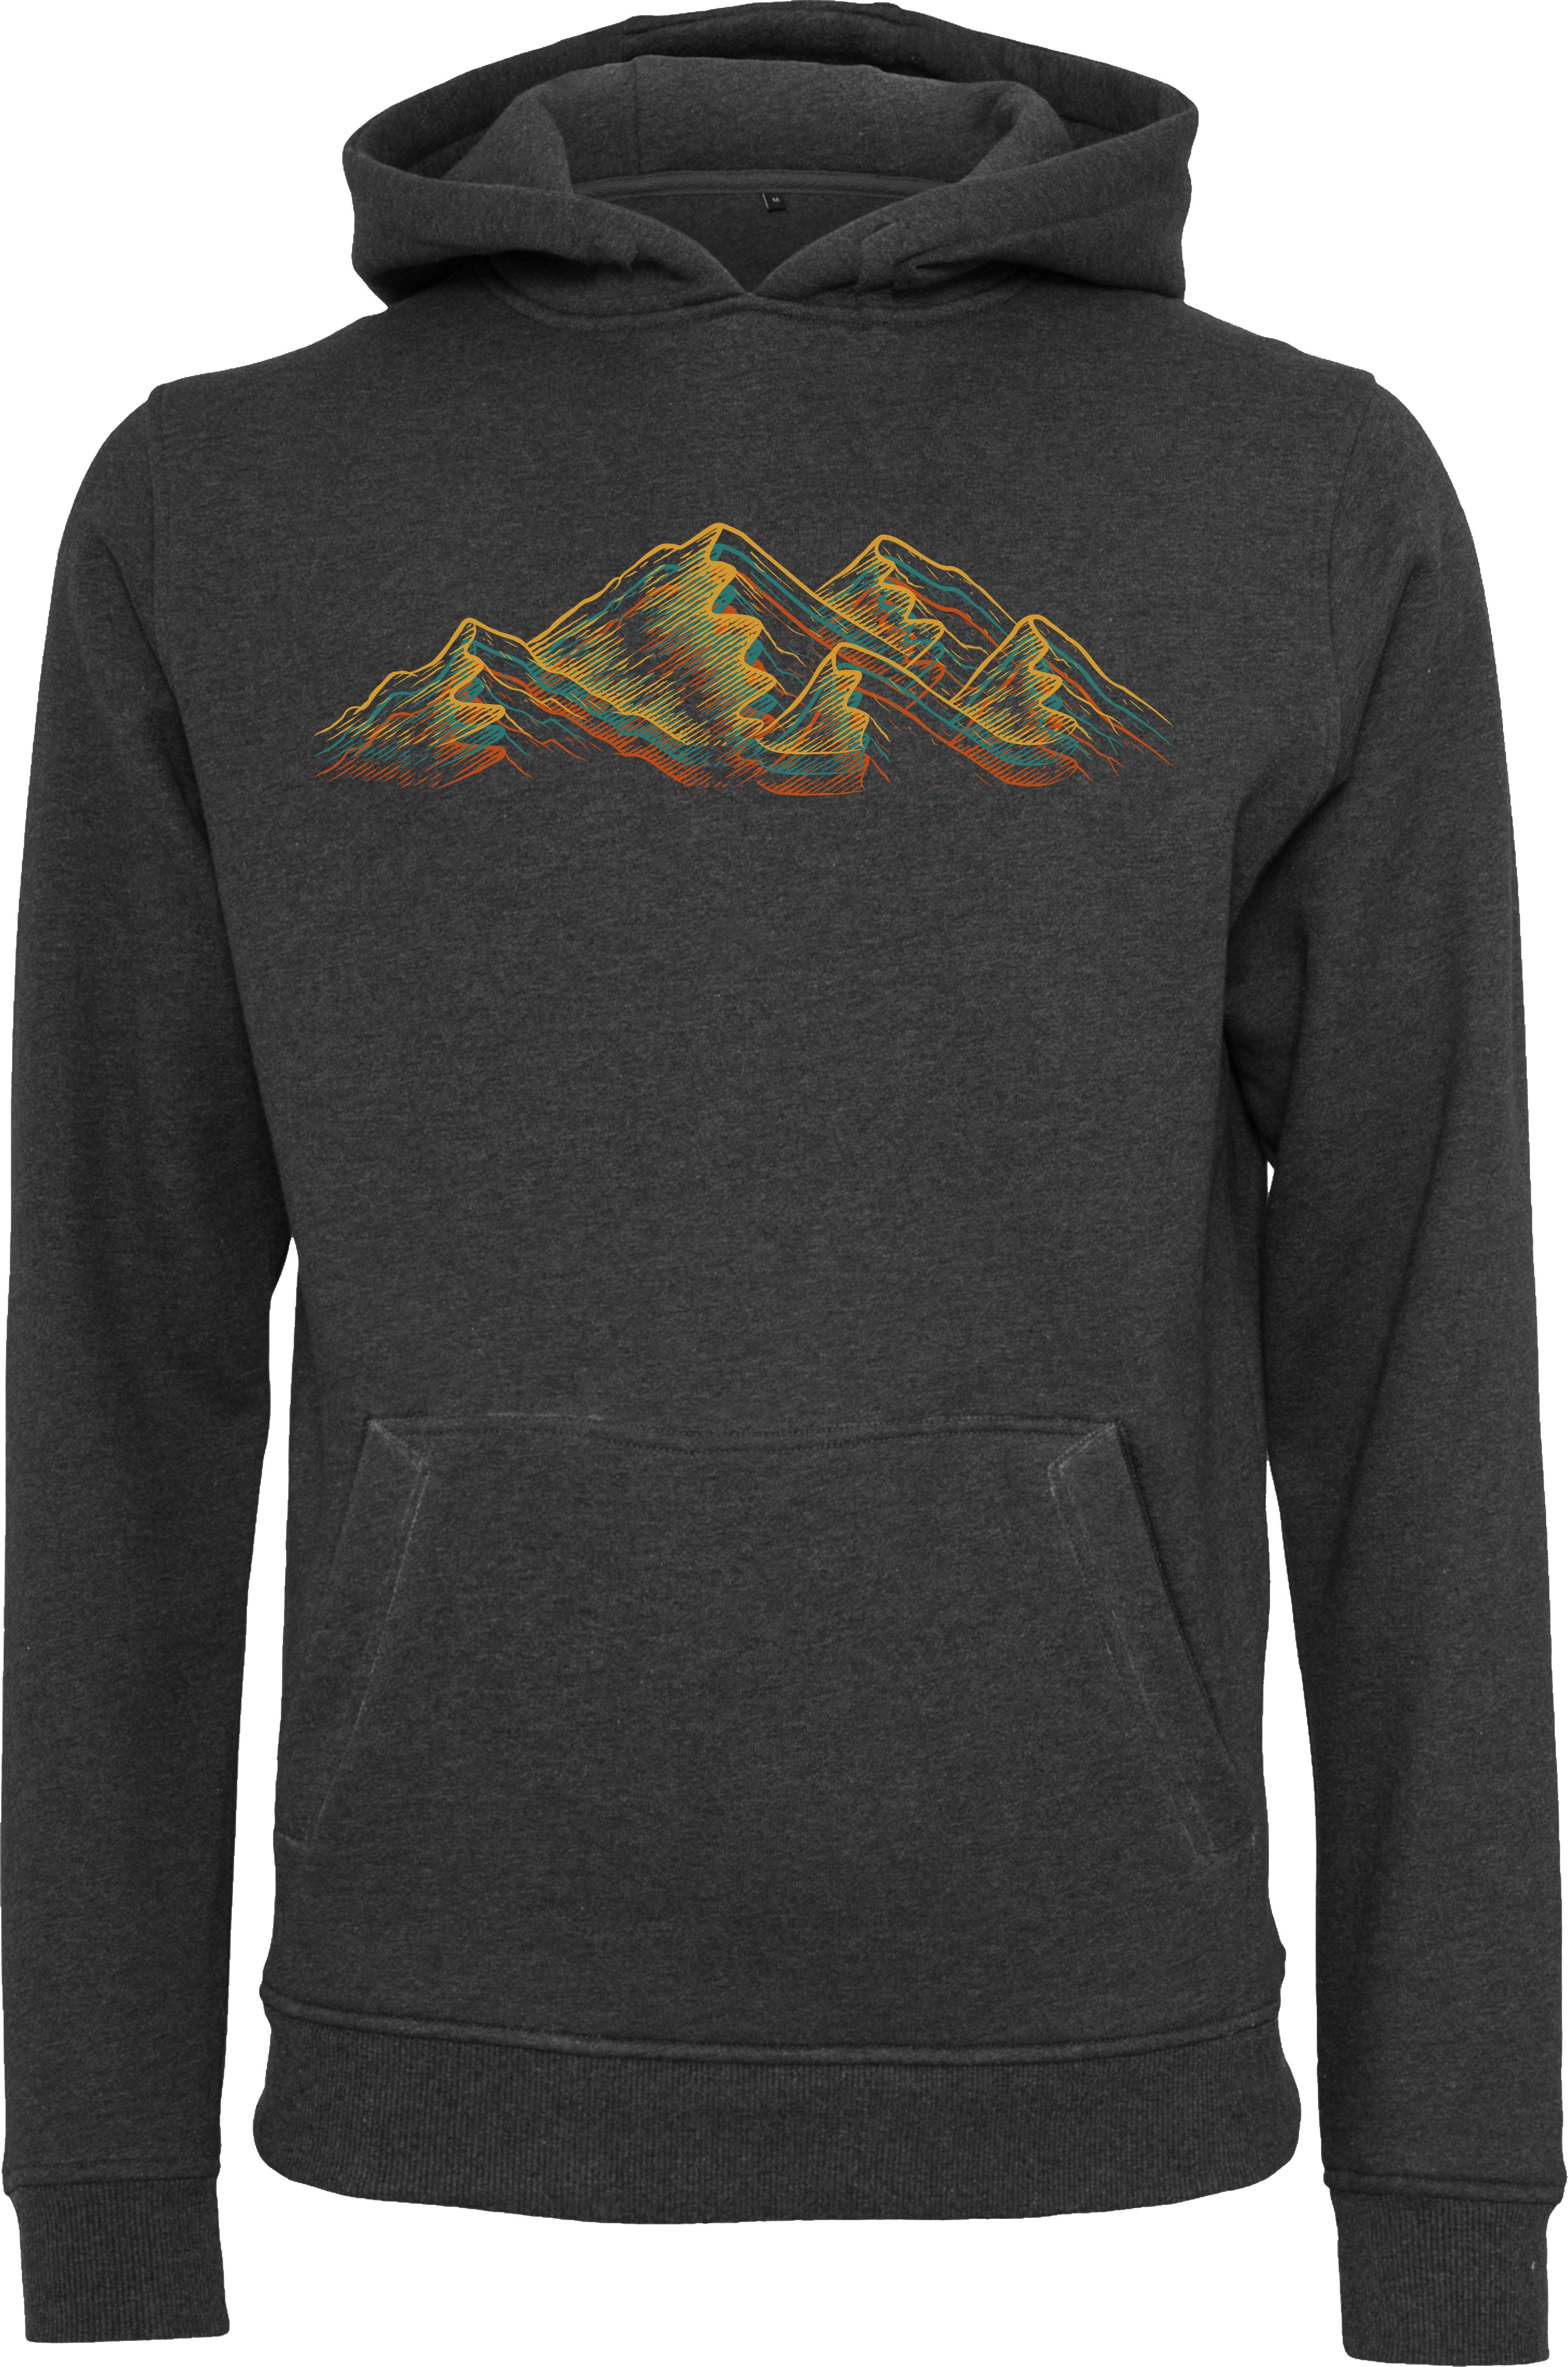 hochwertiger : Hoodie Wandern Siebdruck Kapuzenpullover Baddery Alpen - Charcoal Kletter Kleidung